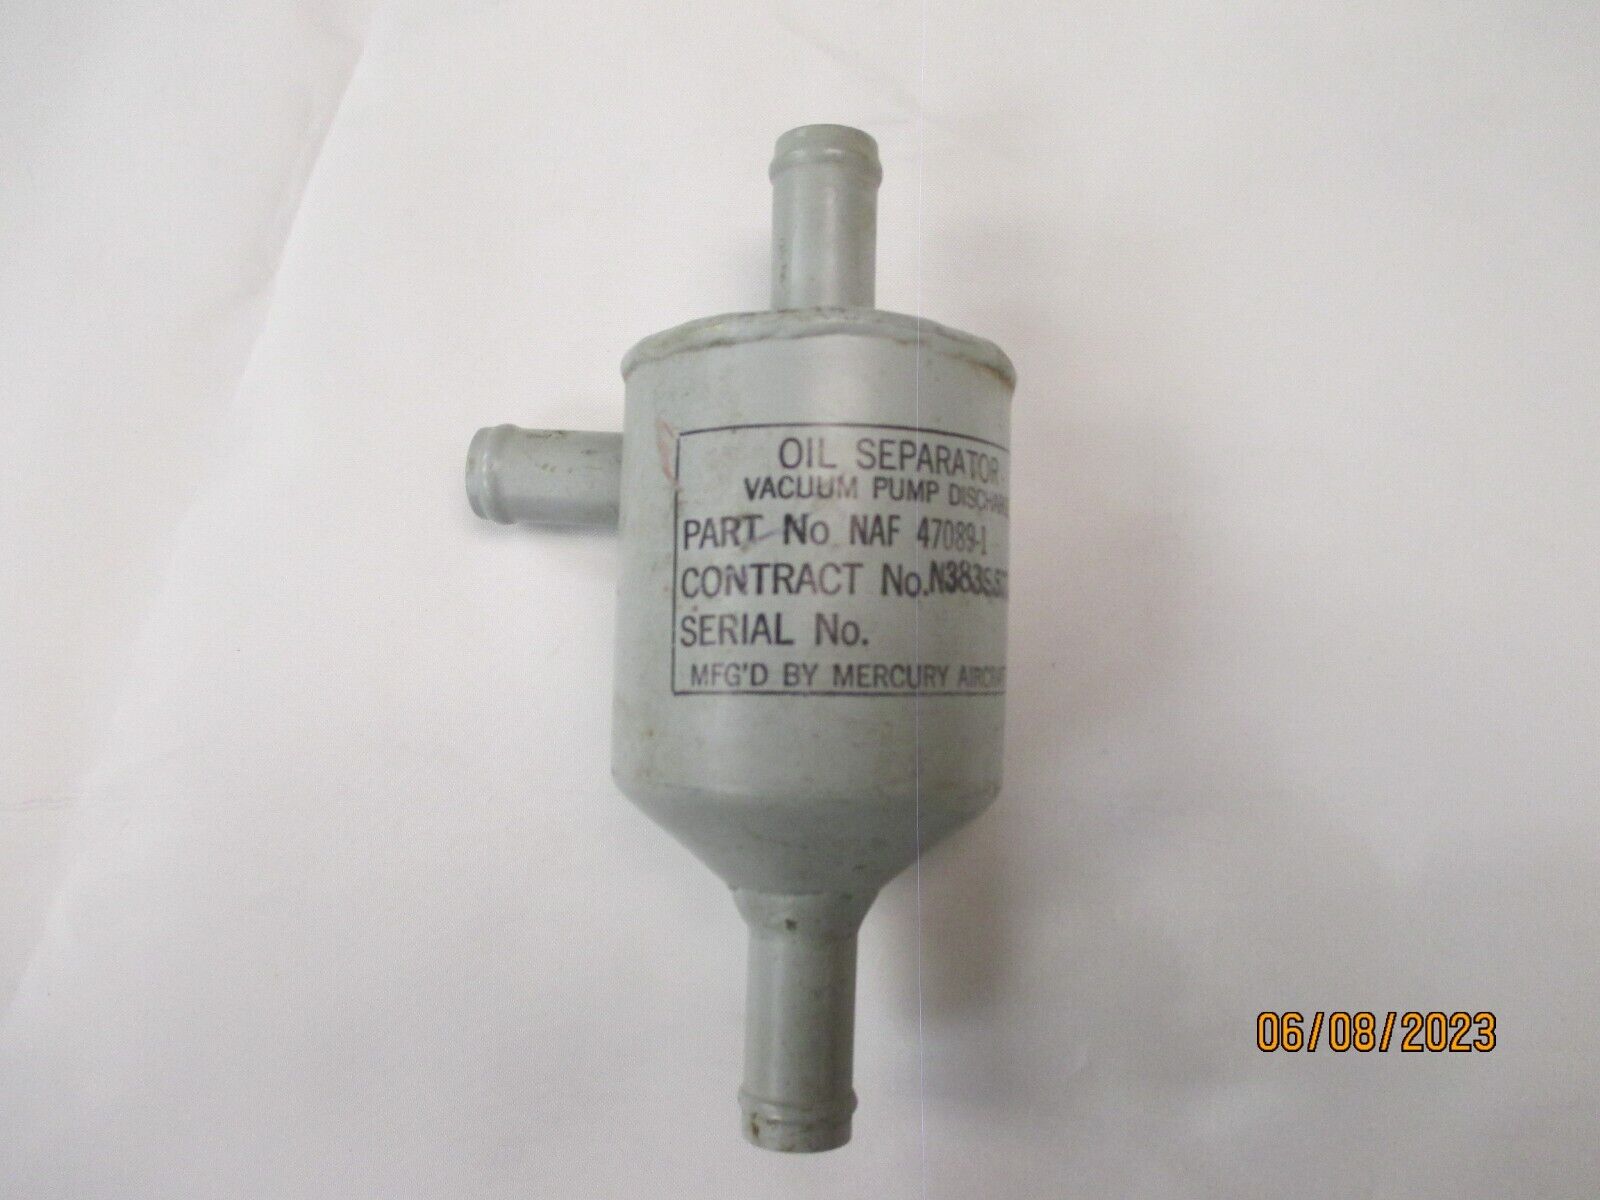 Aircraft Oil Seperator / Vacuum Pump Discharge